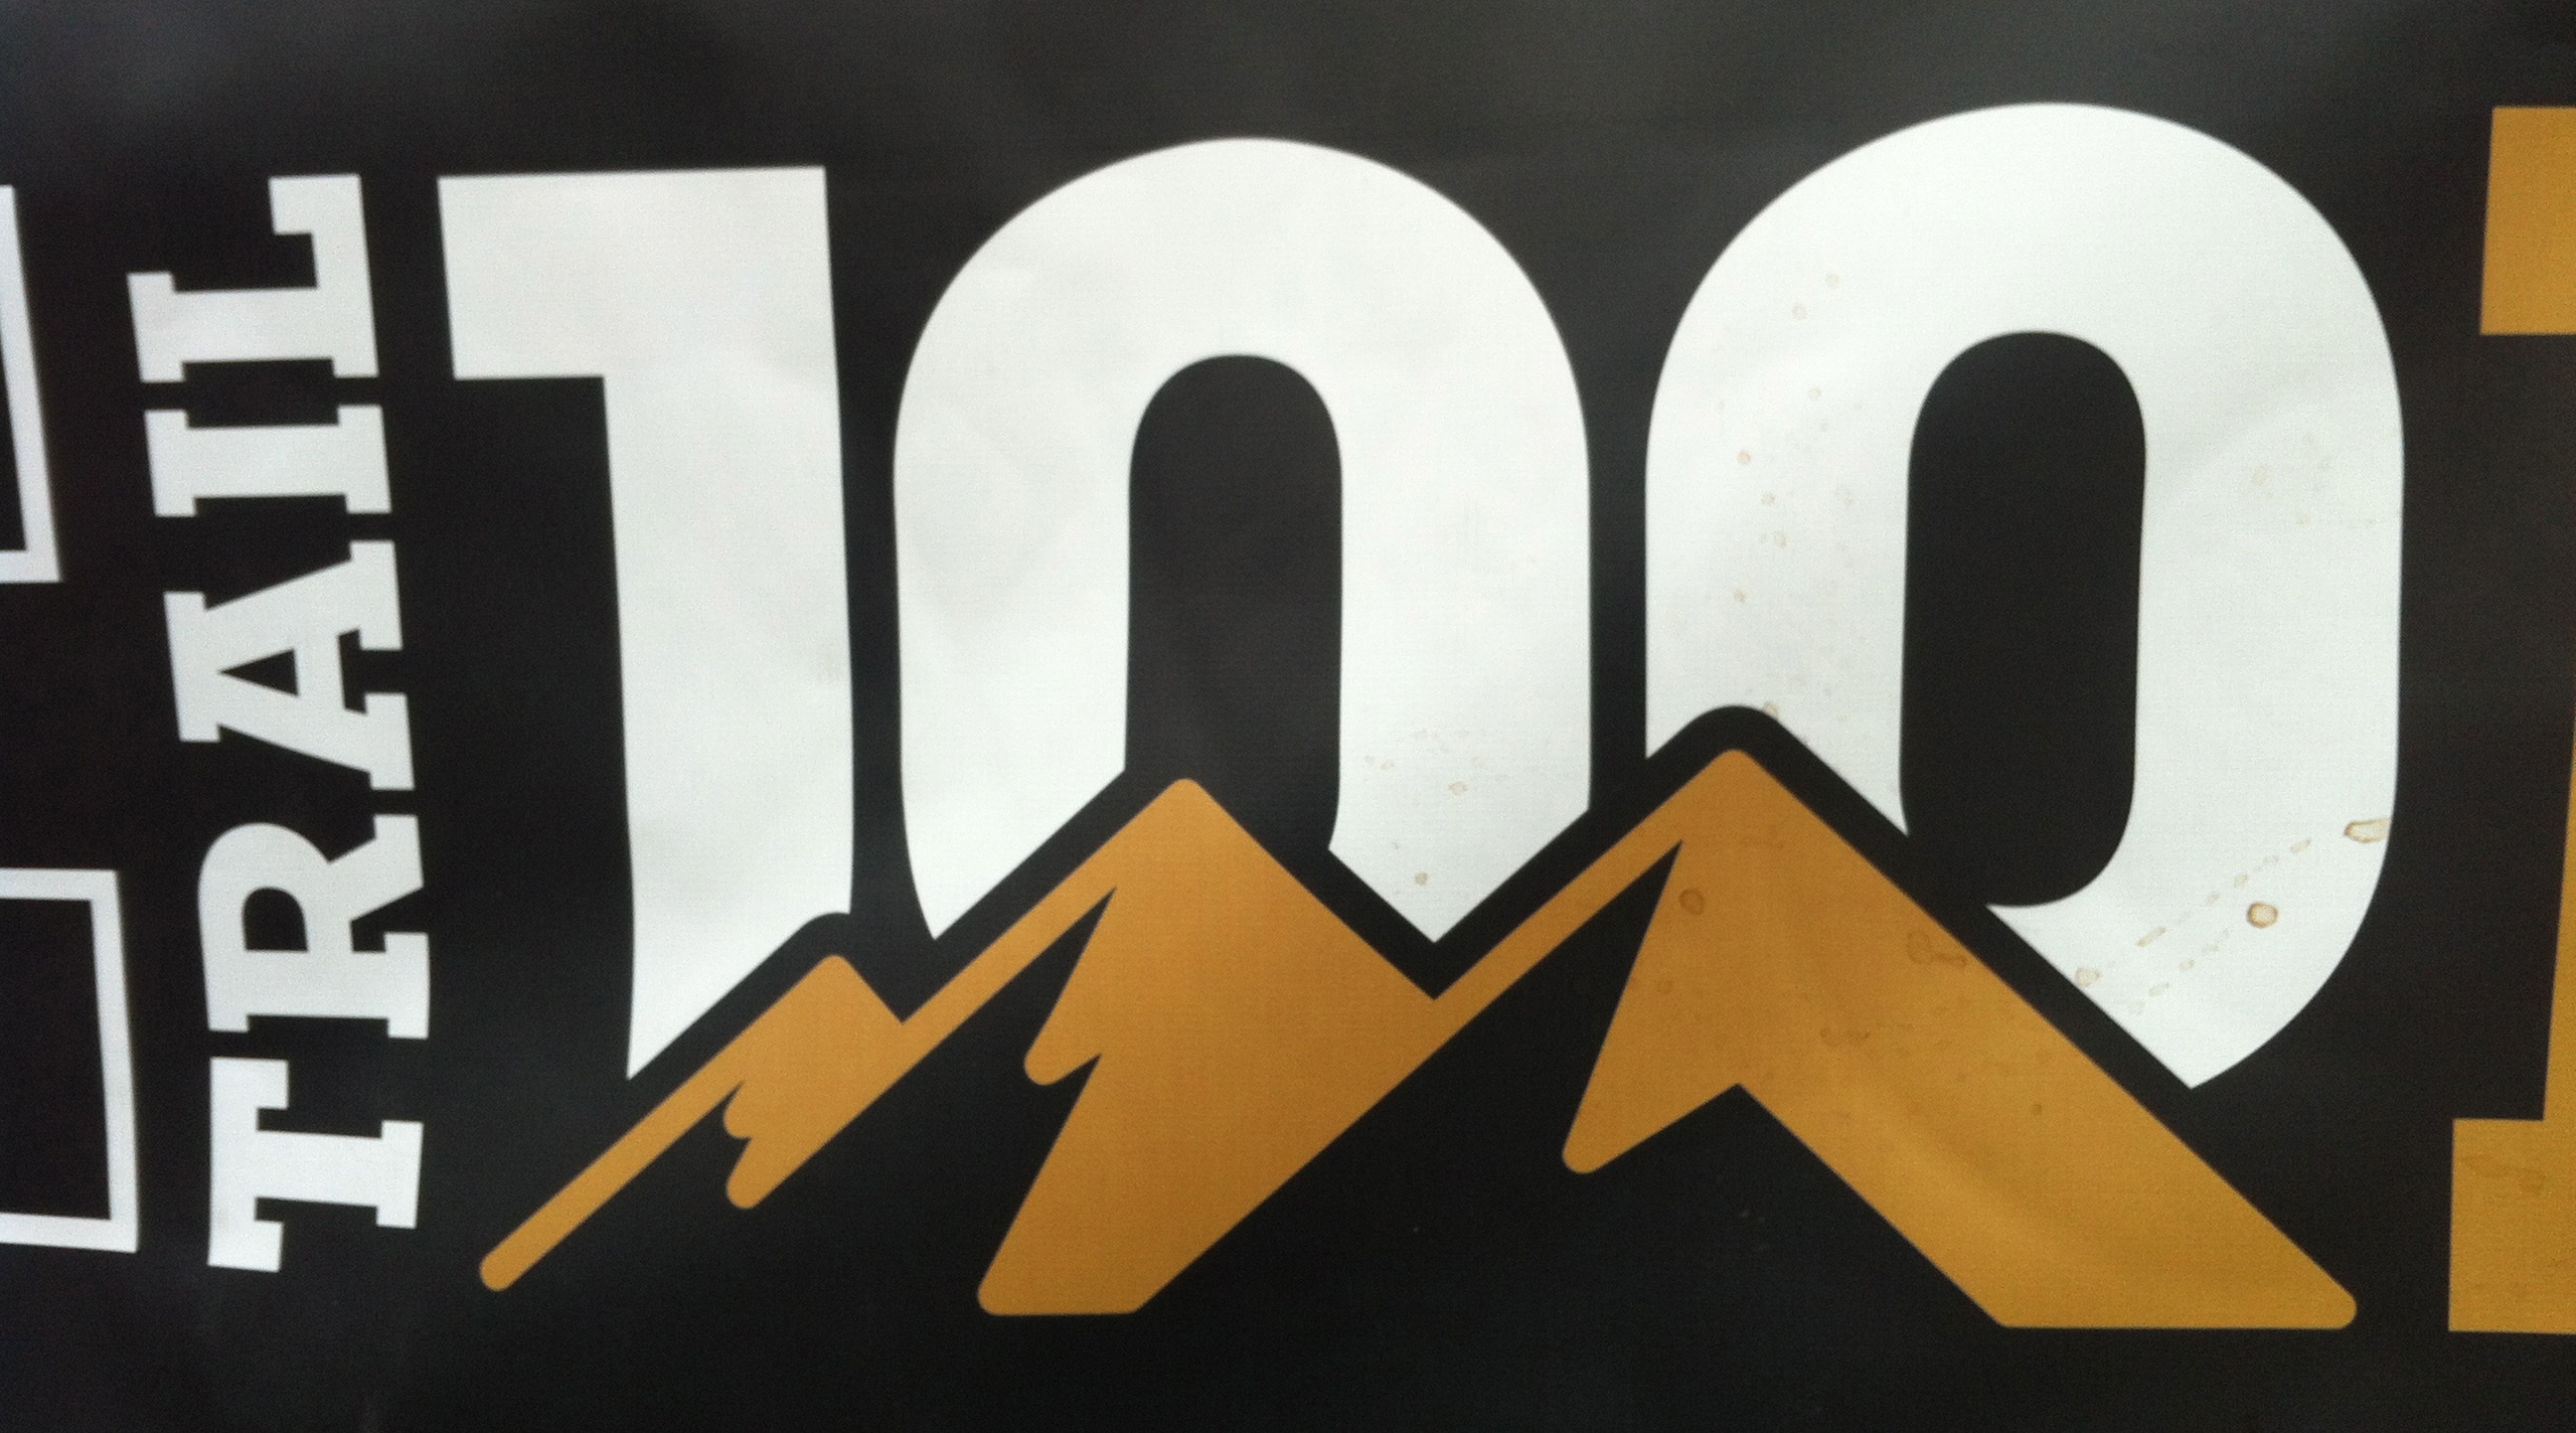 The Leadville 100 - the best known Marathon?